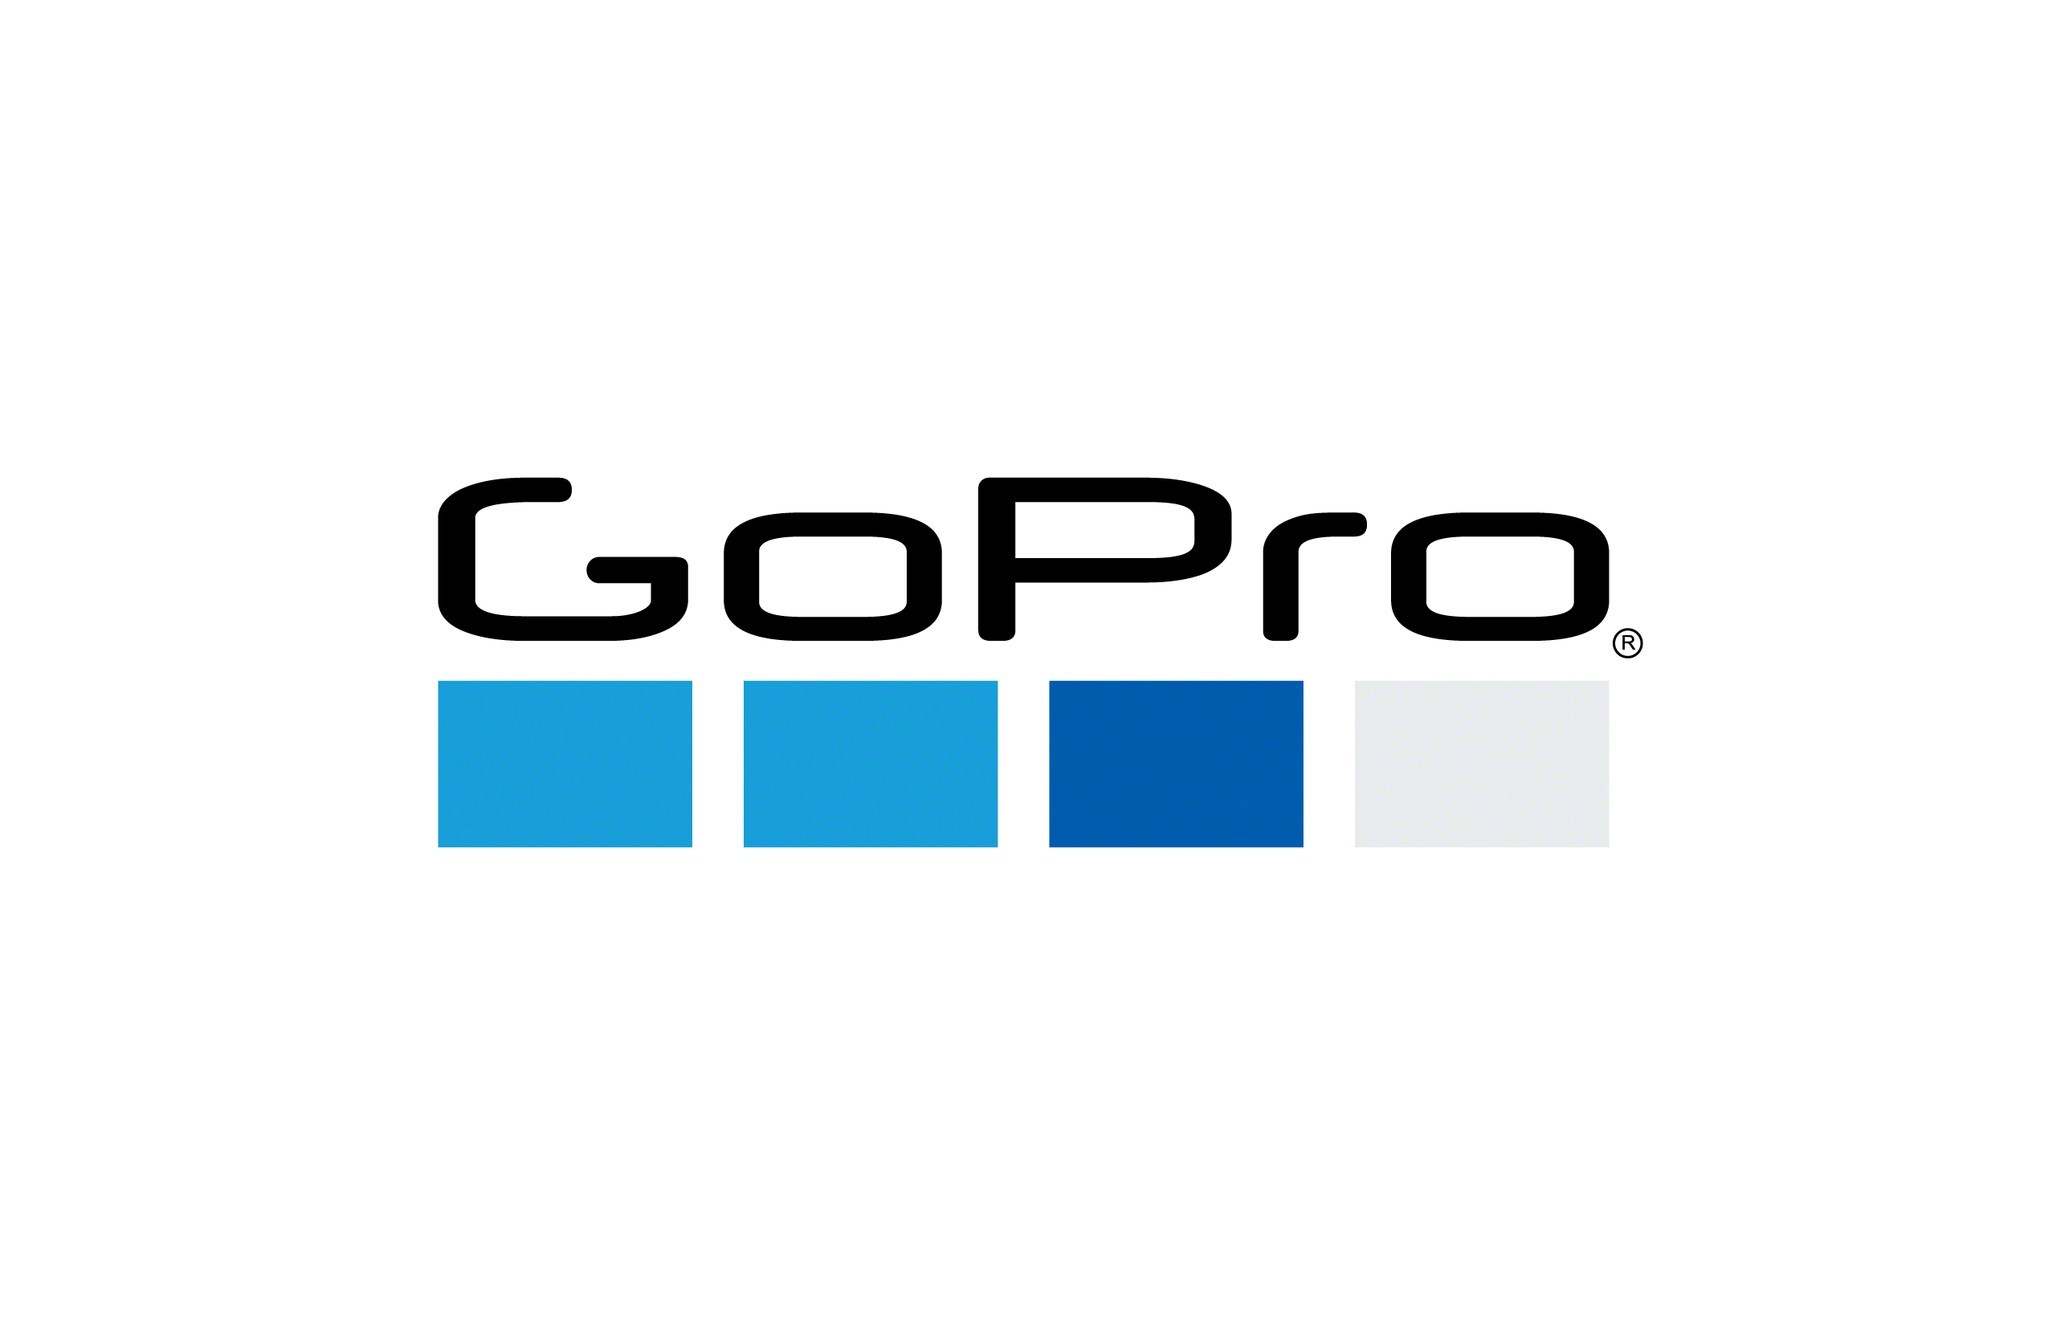 Го про ру. Gopro9 logo. GOPRO надпись. GOPRO бренд. Логотип гоупро.